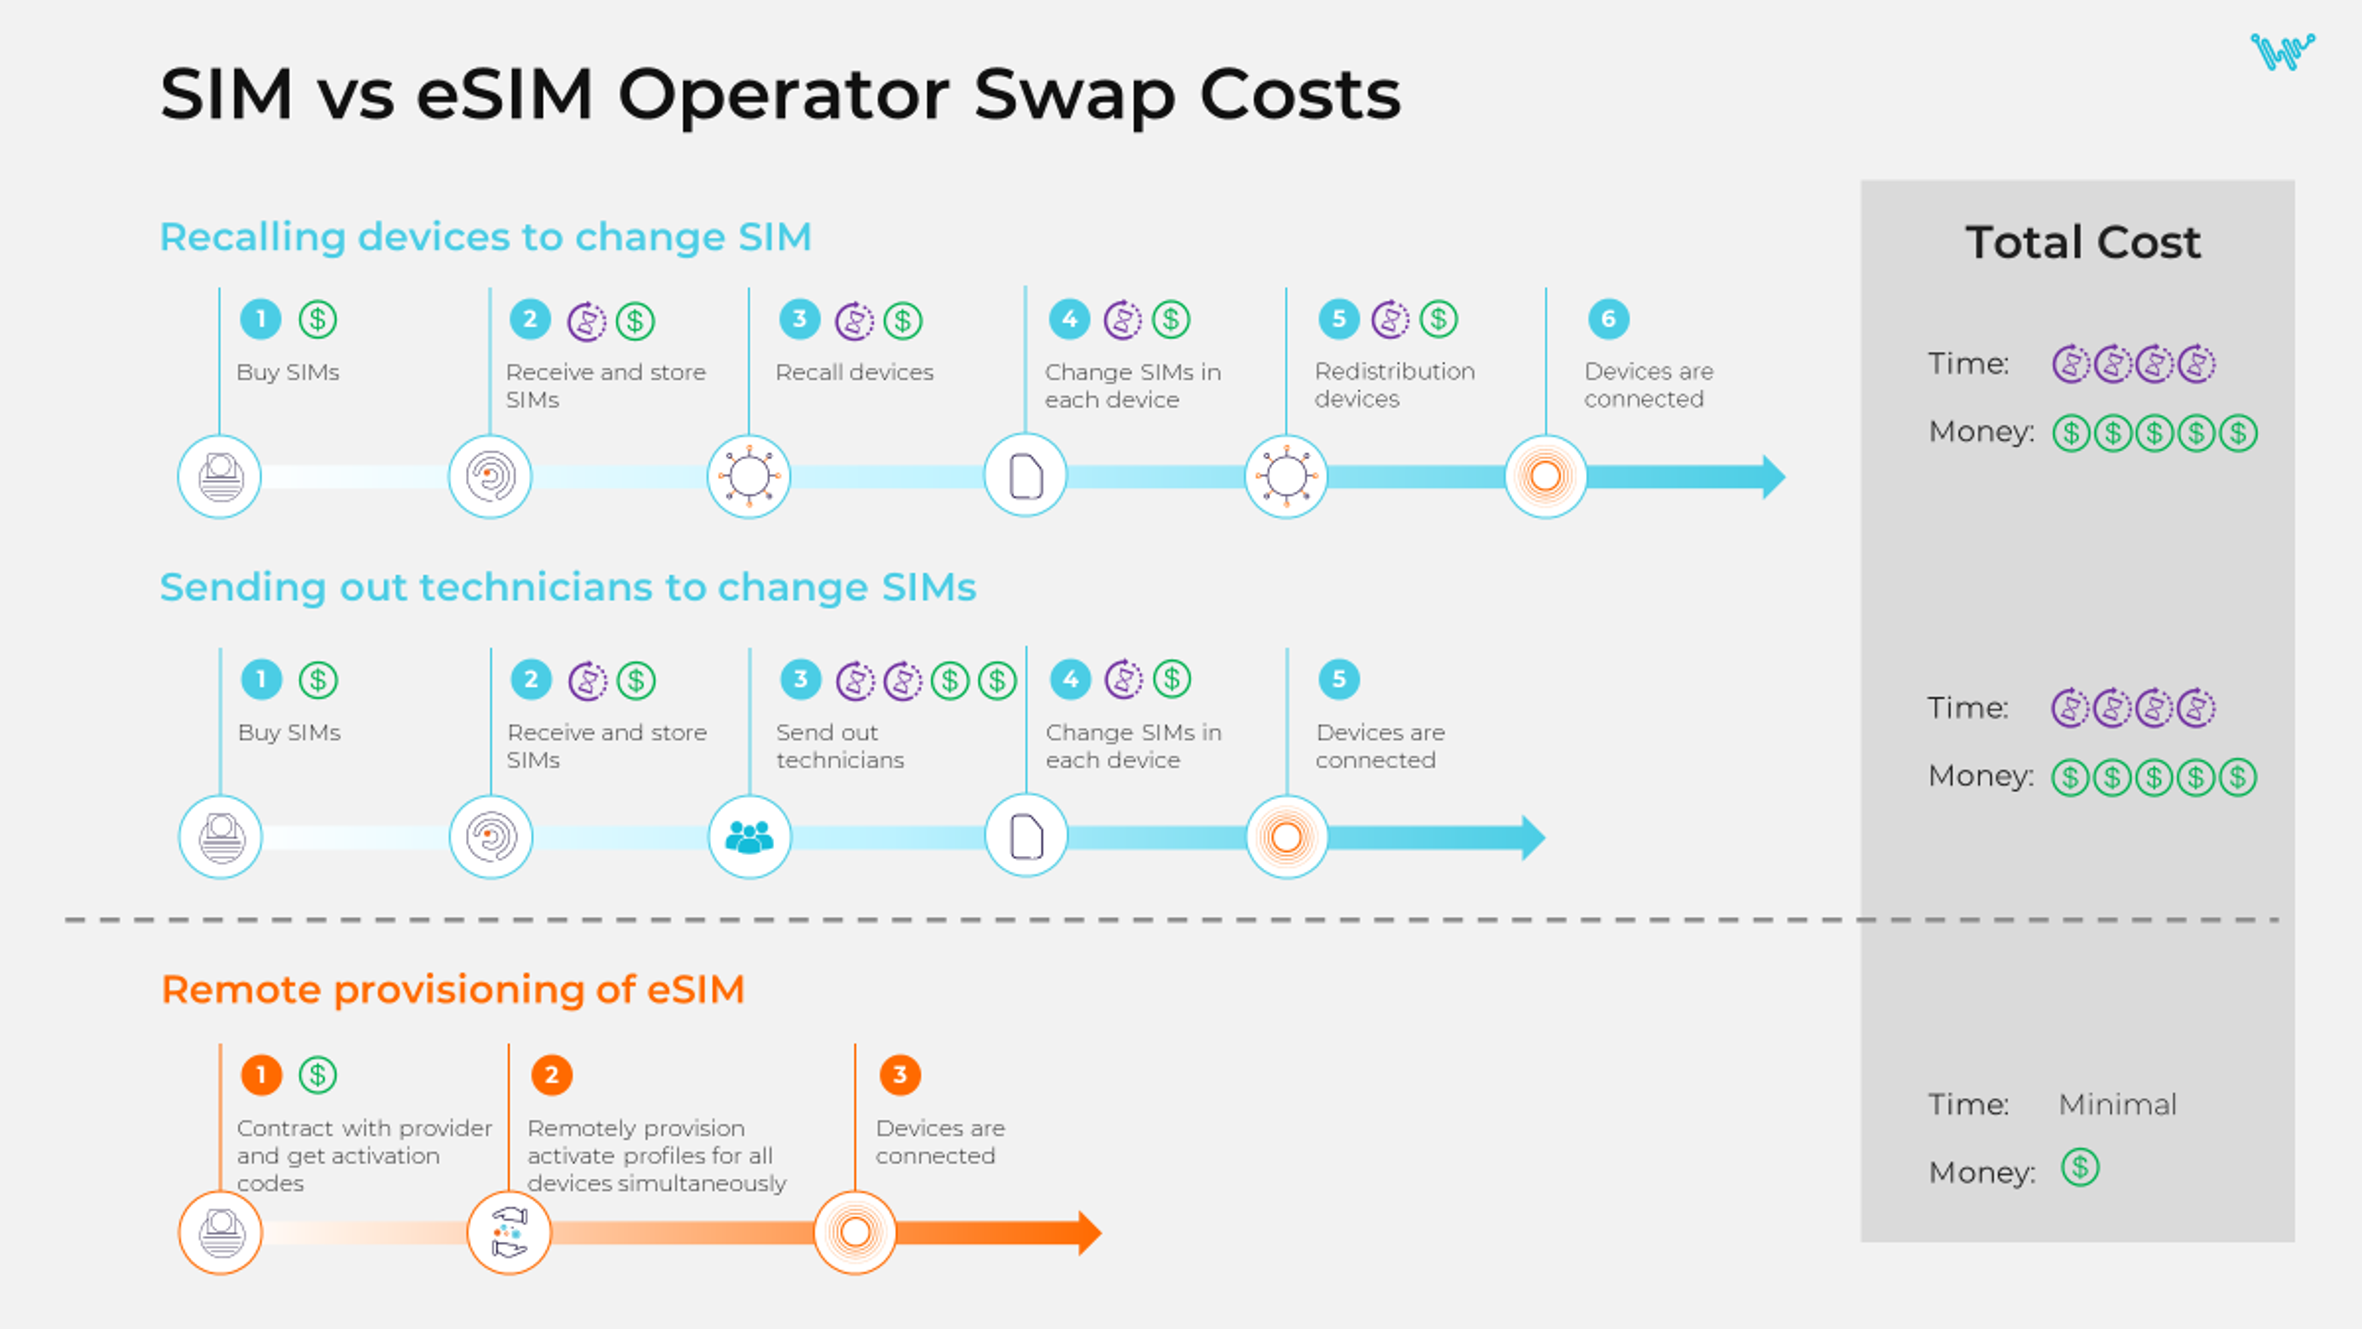 Connectivity Operator Swap Costs